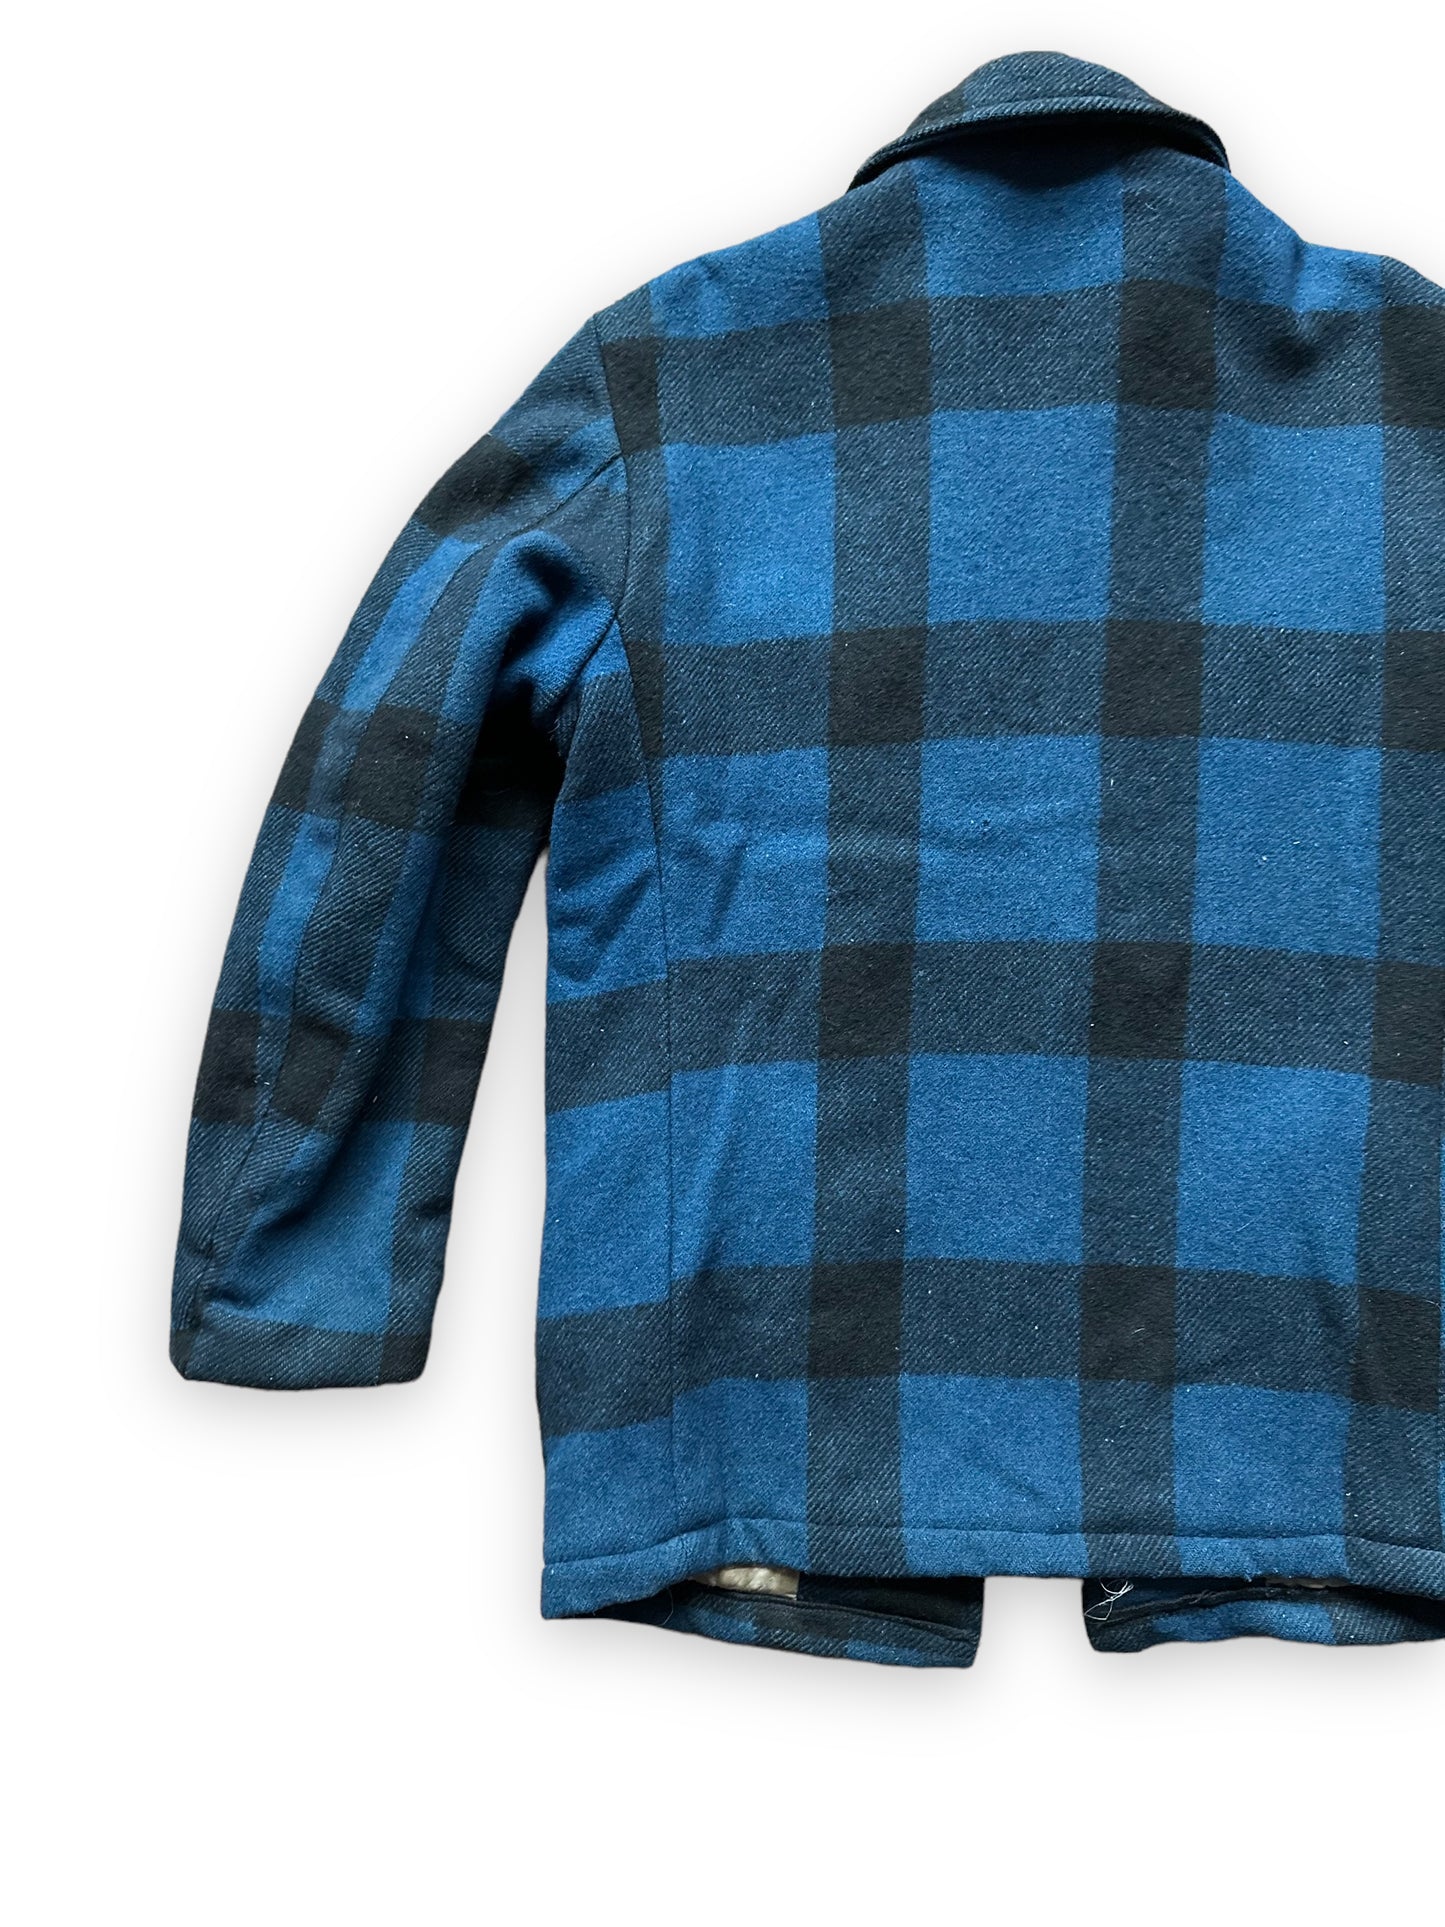 Rear Left View on Vintage Black Bear Cobalt Blue and Black Wool Coat SZ L  |  Vintage Workwear Seattle | Barn Owl Vintage Seattle